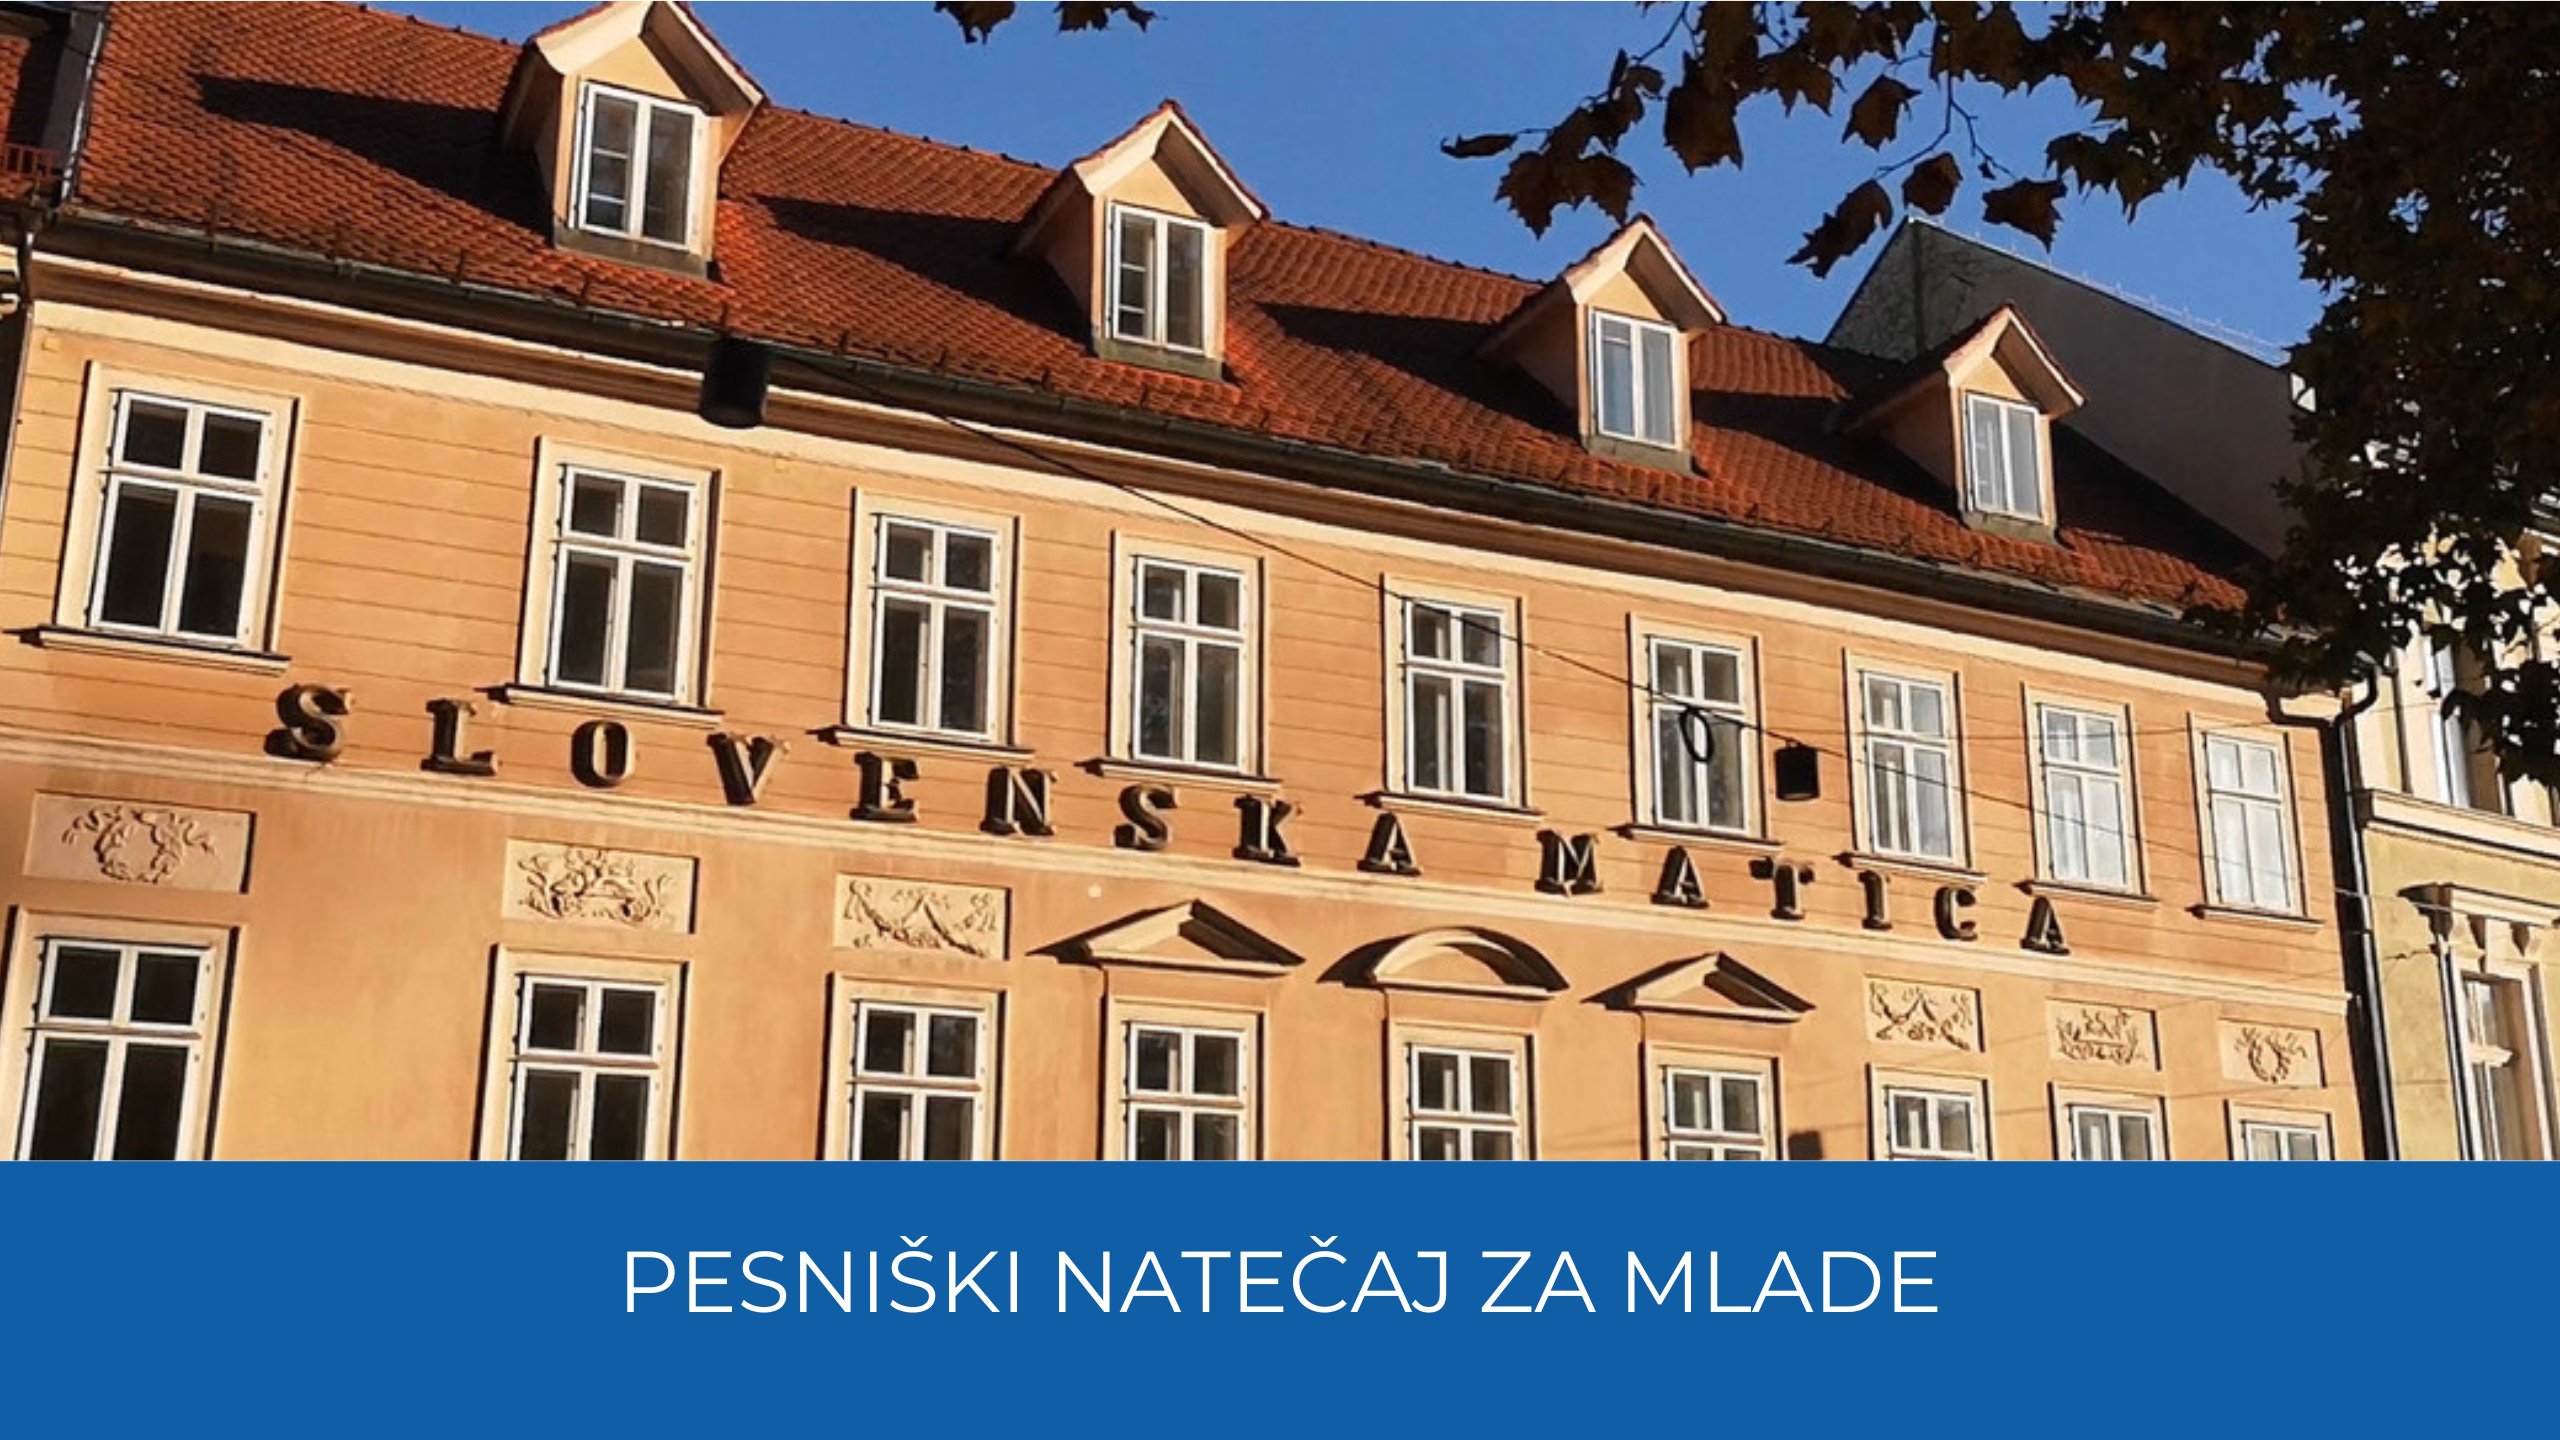 Stavba Slovenske matice